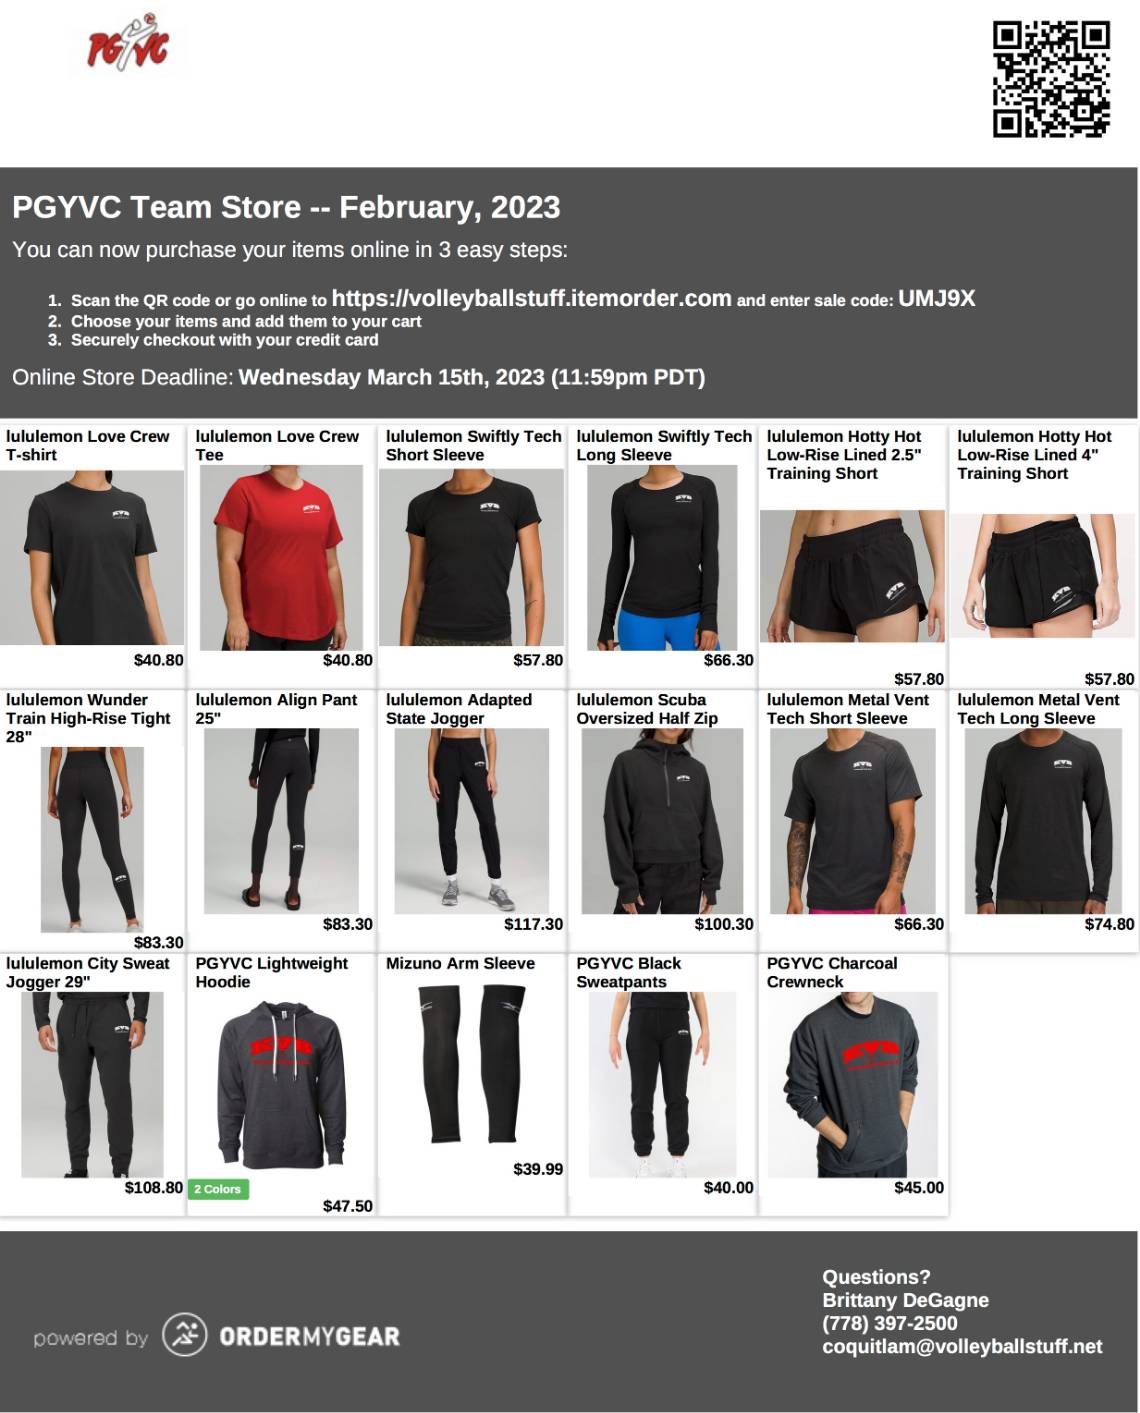 PGYVC Team Store -- February, 2023 - Flyer.jpg